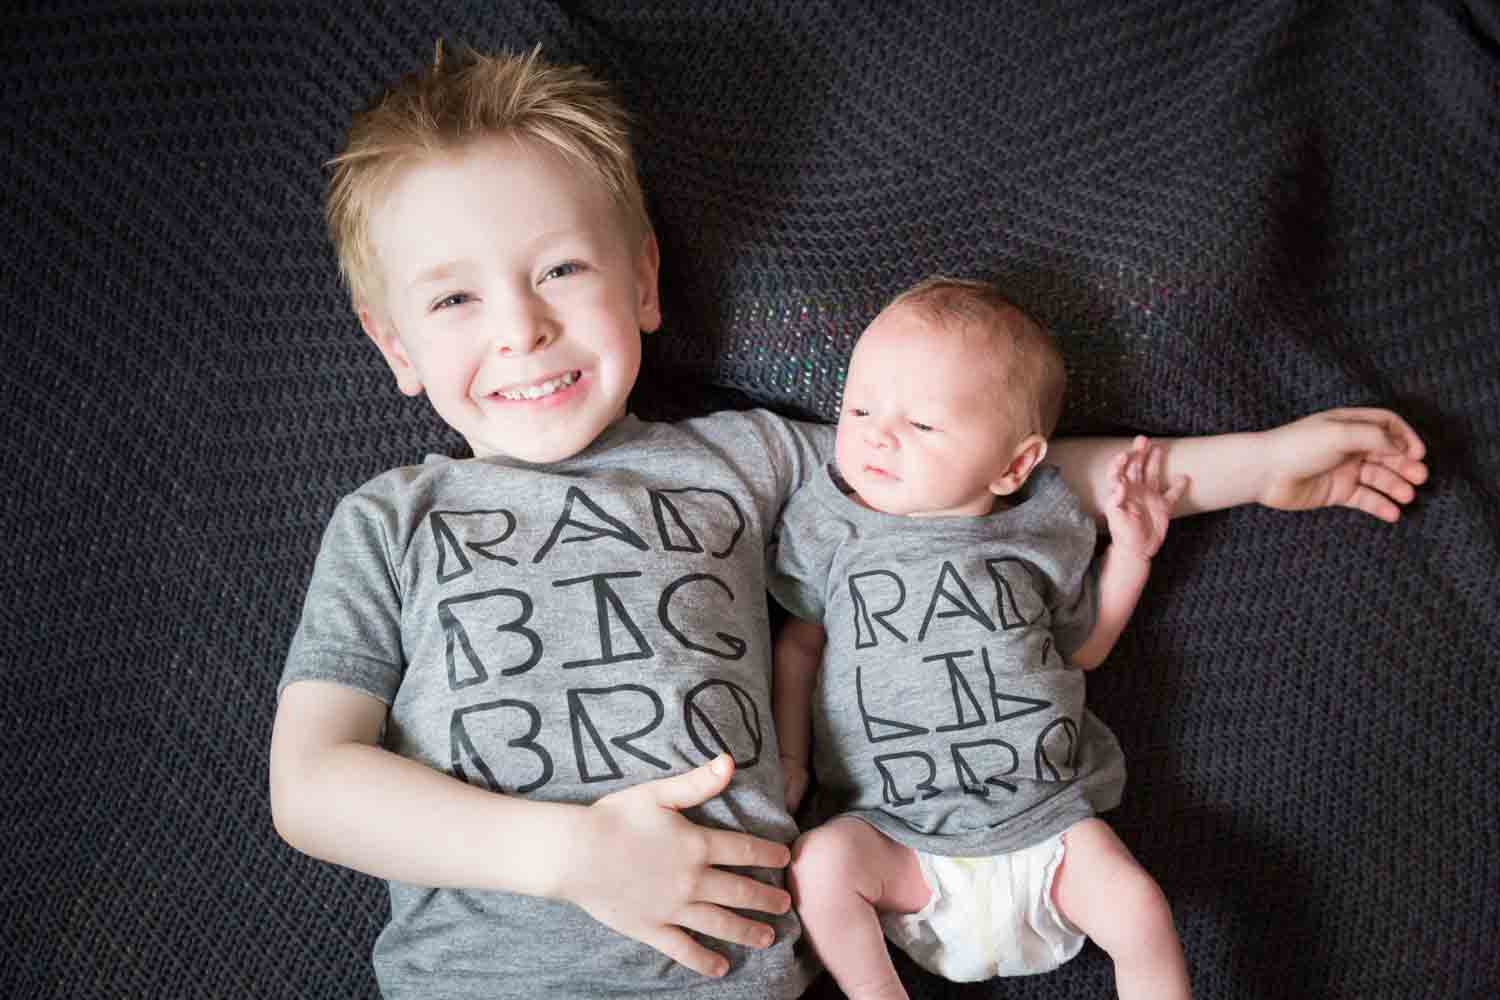 Little boy and newborn baby wearing matching grey t-shirts